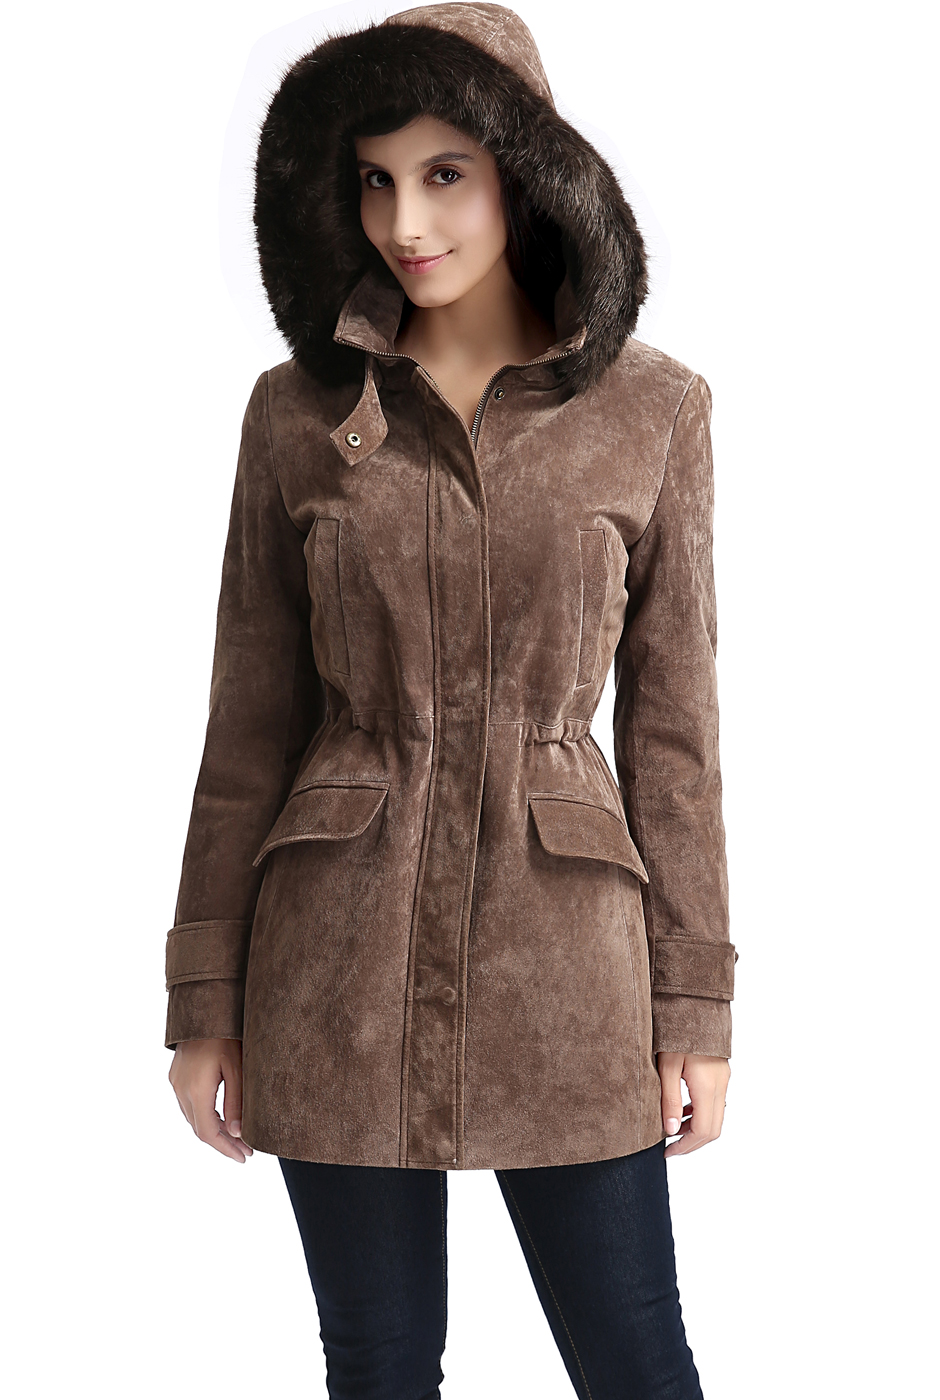 Women Chloe Suede Leather Hooded Parka Coat (Regular & Plus Size & Petite) - image 1 of 5